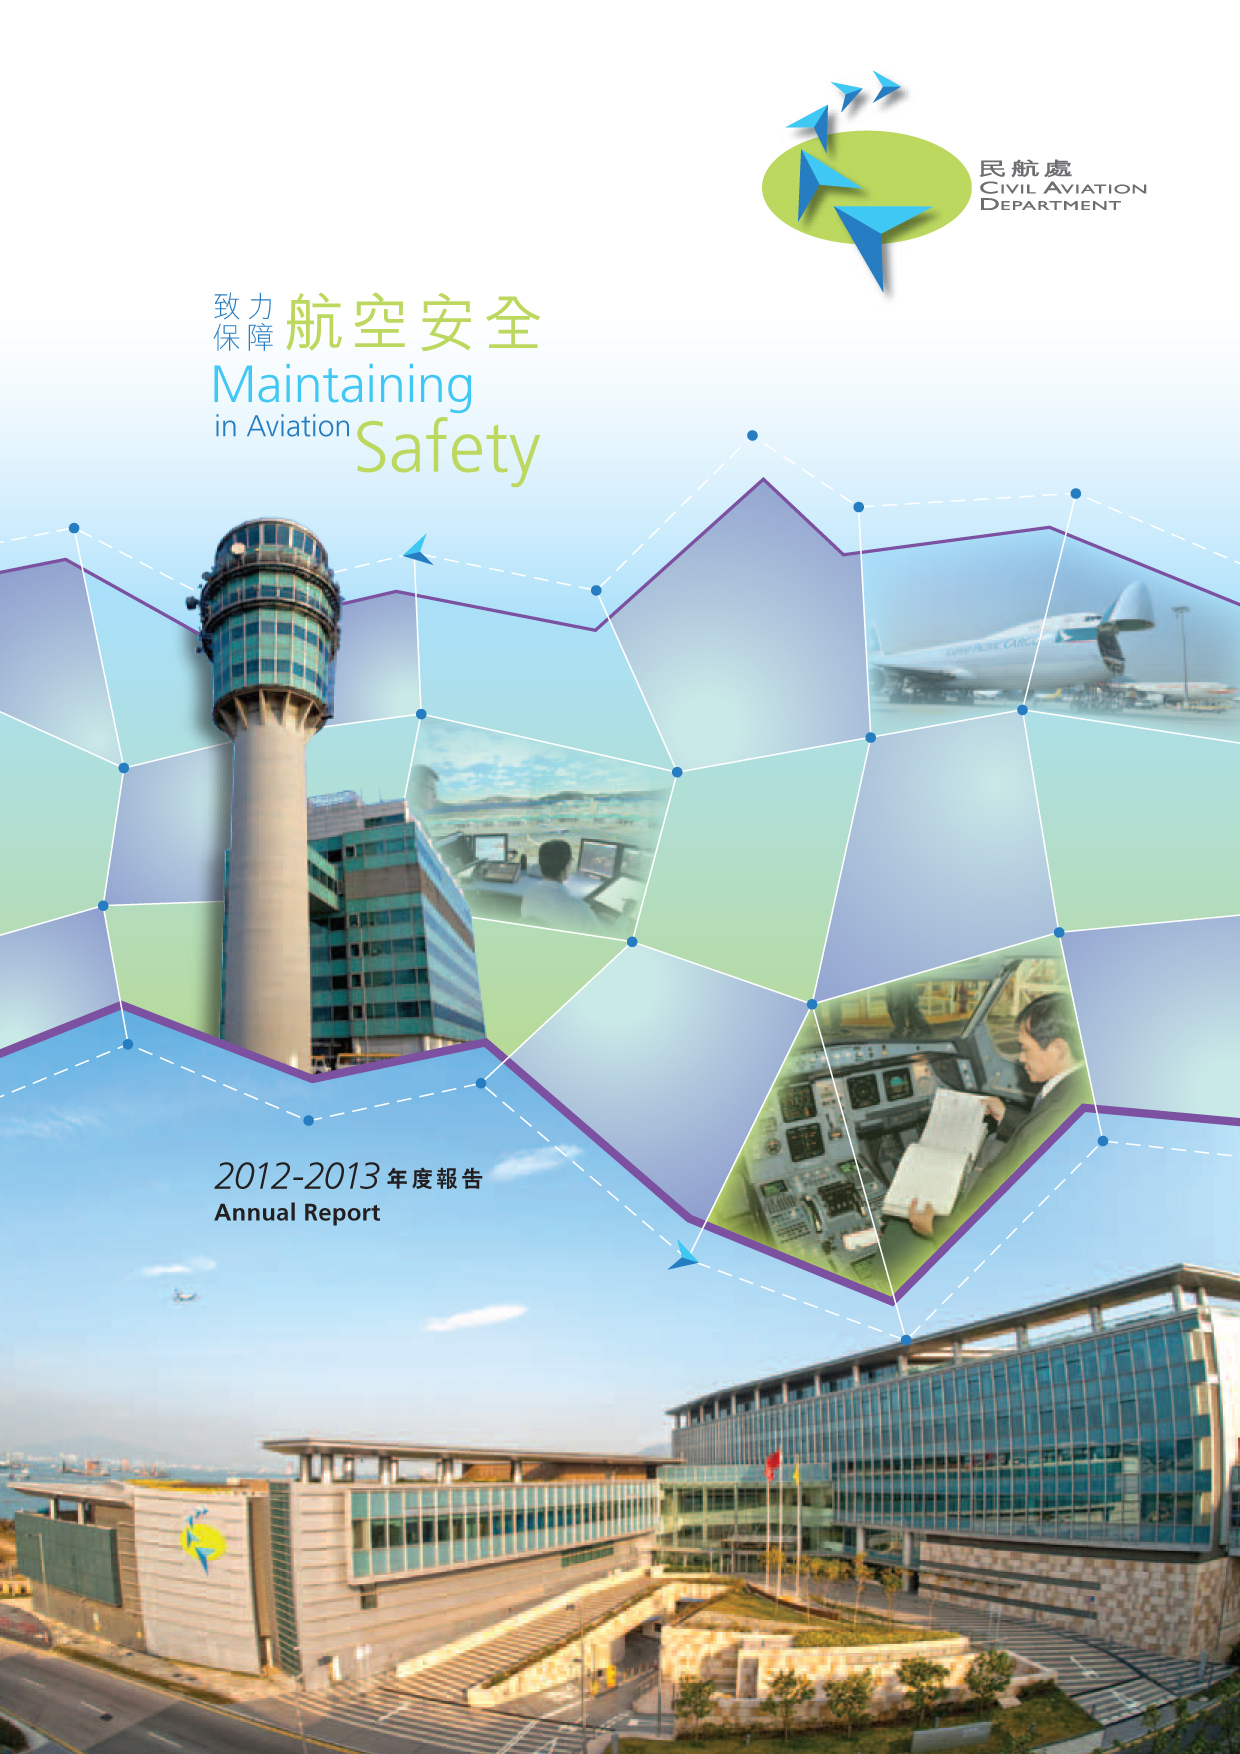 CAD Annual Report 2012/2013